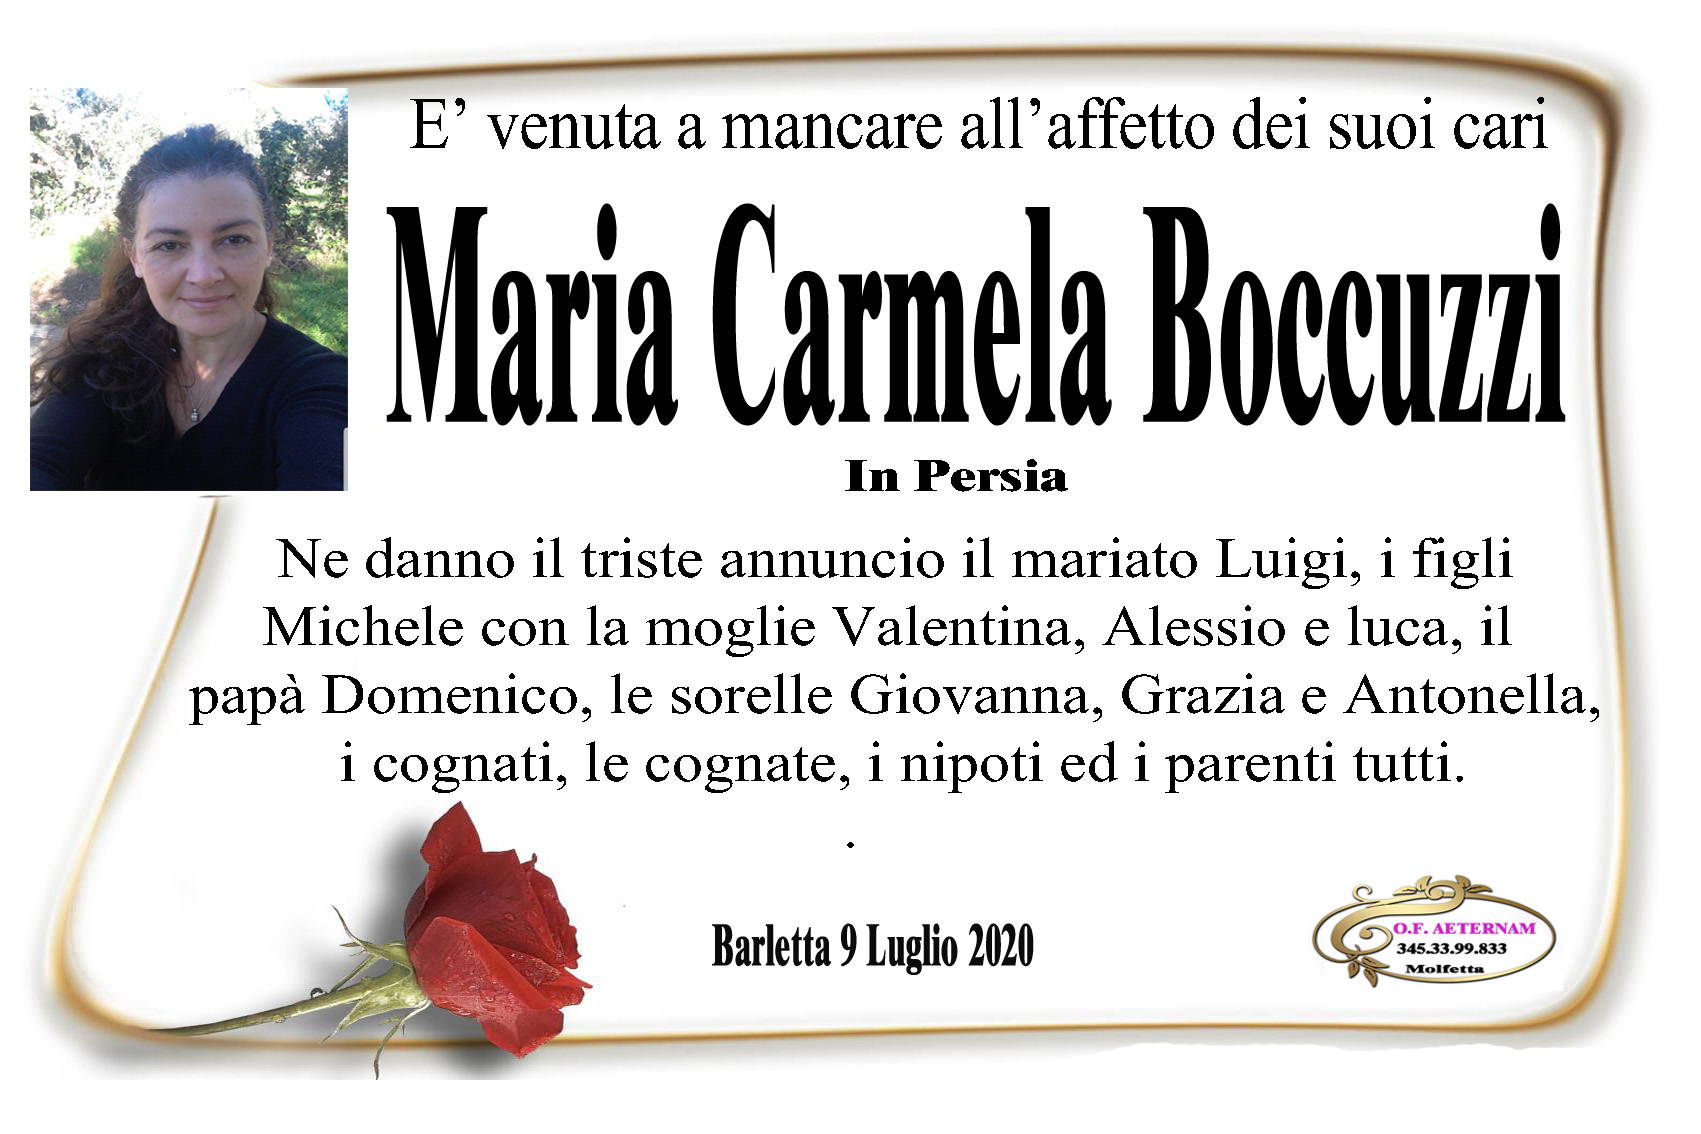 Maria Carmela Boccuzzi